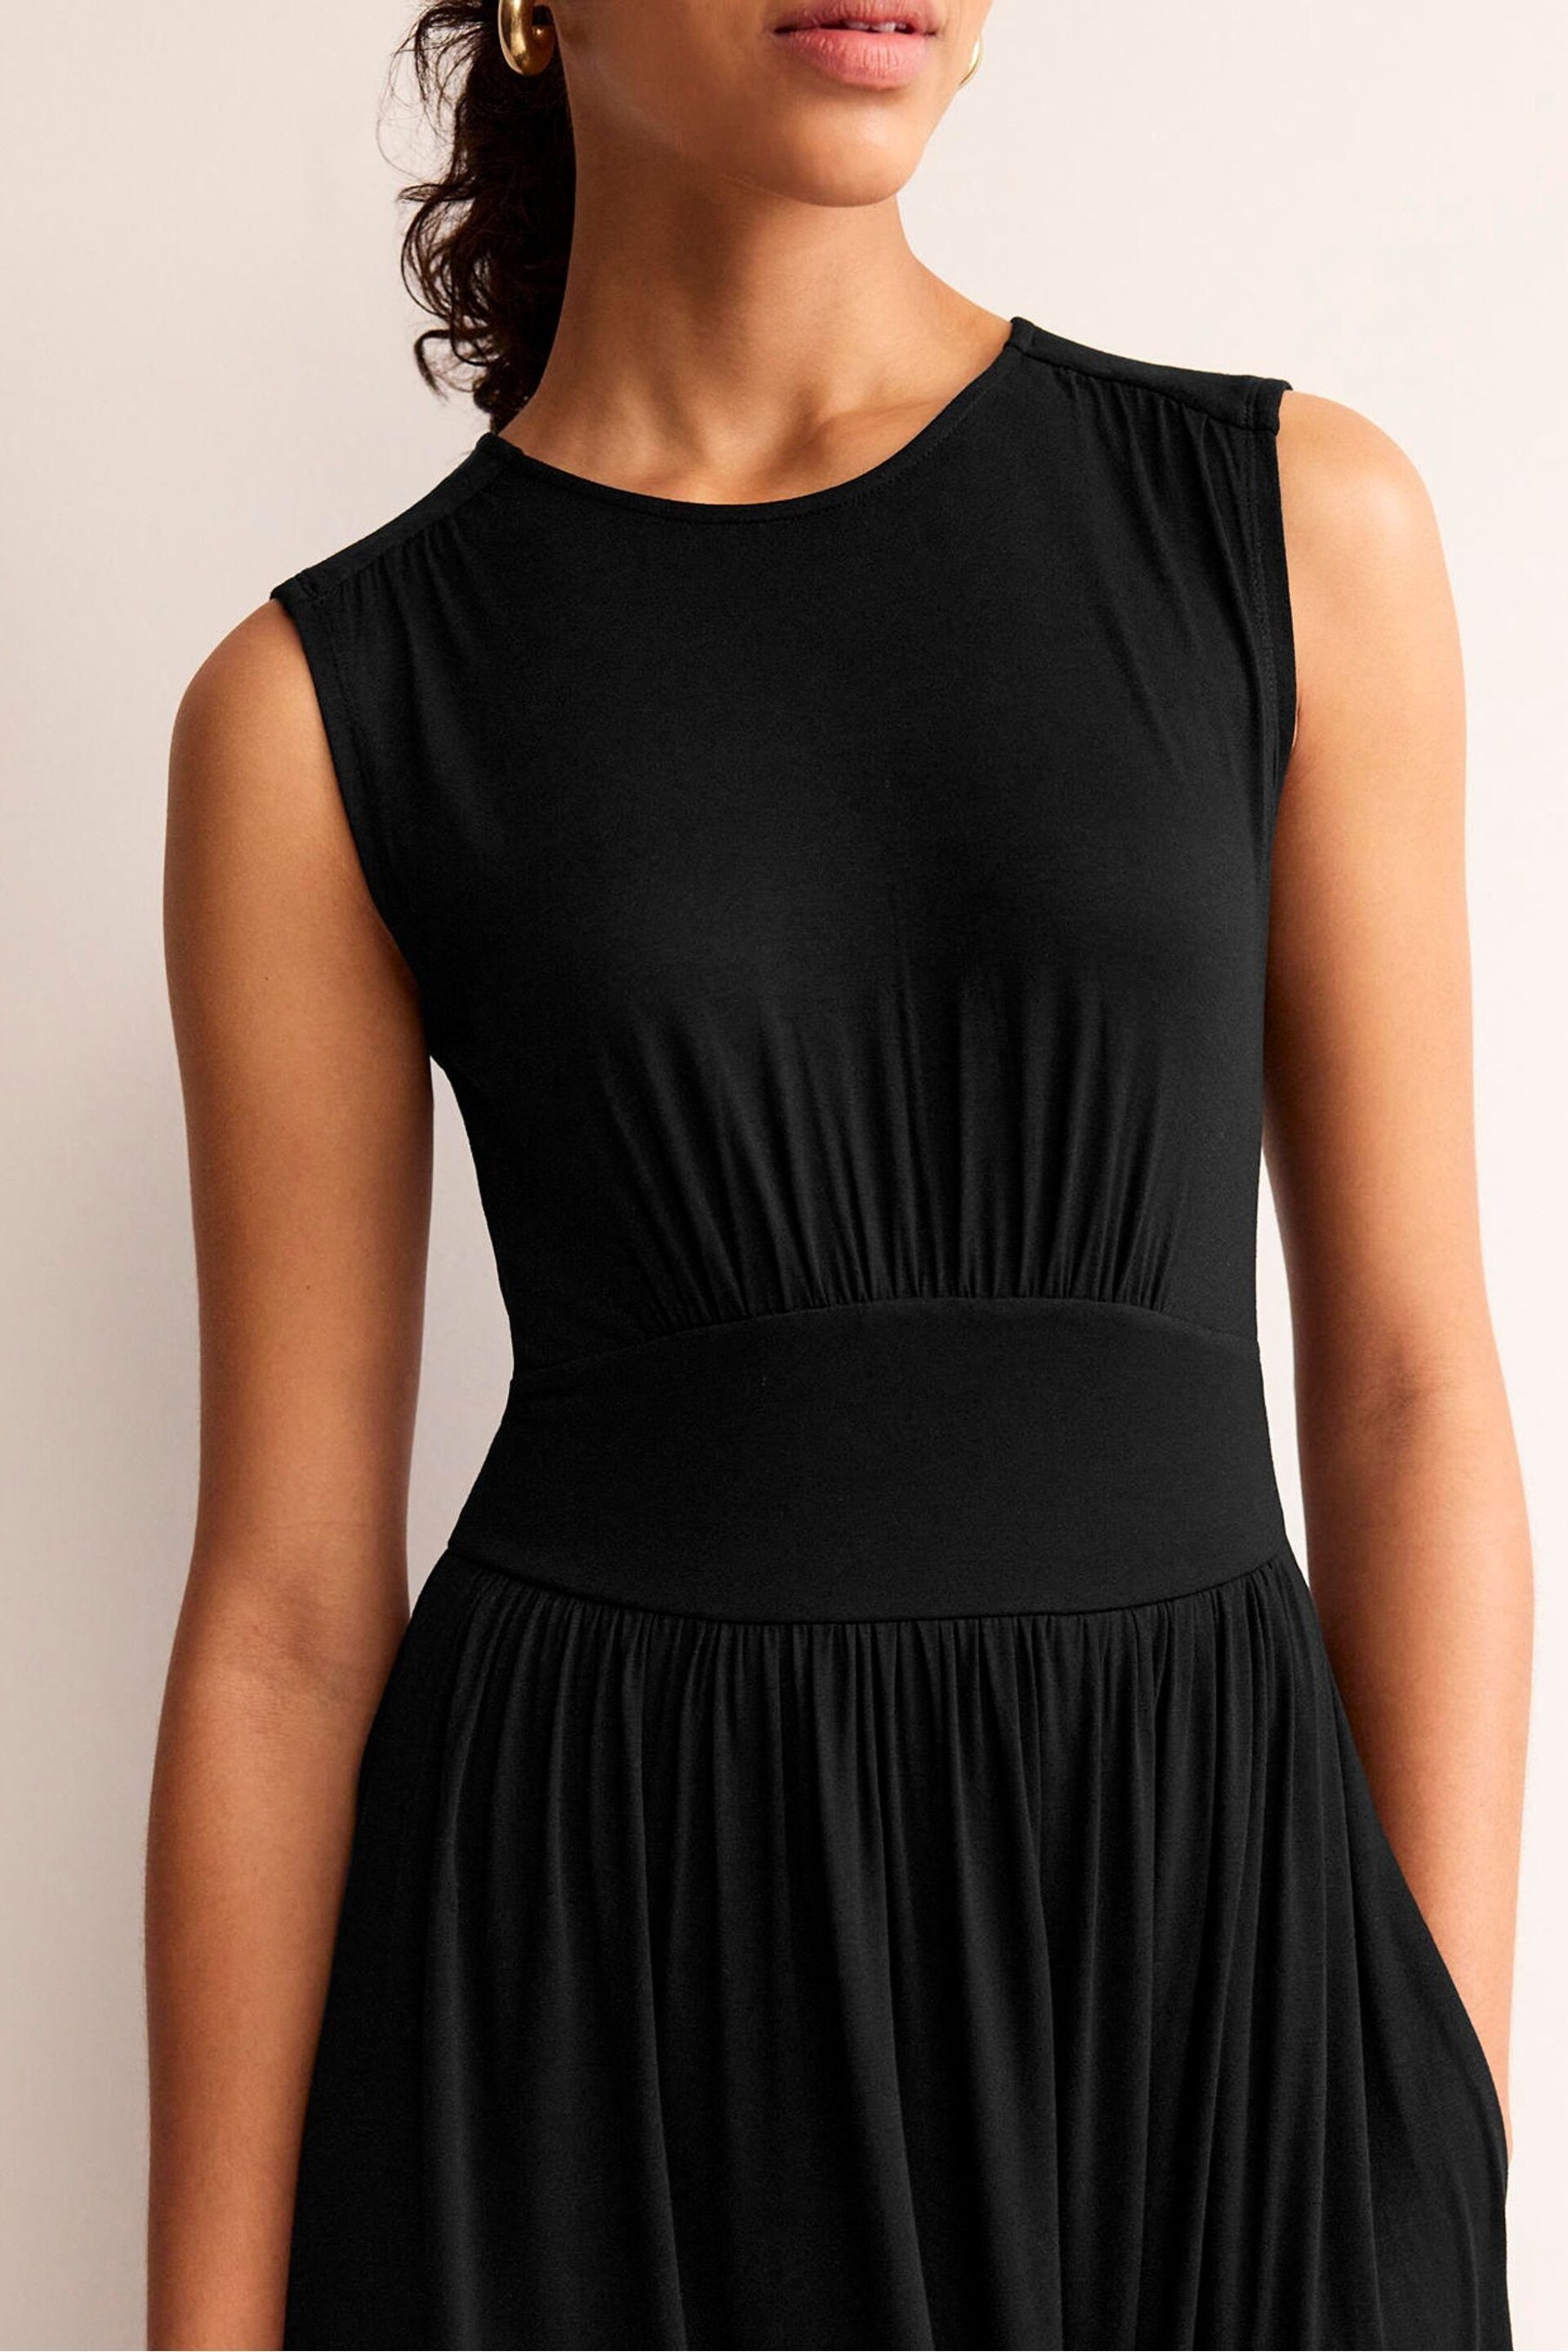 Boden Black Petite Thea Sleeveless Midi Dress - Image 3 of 5